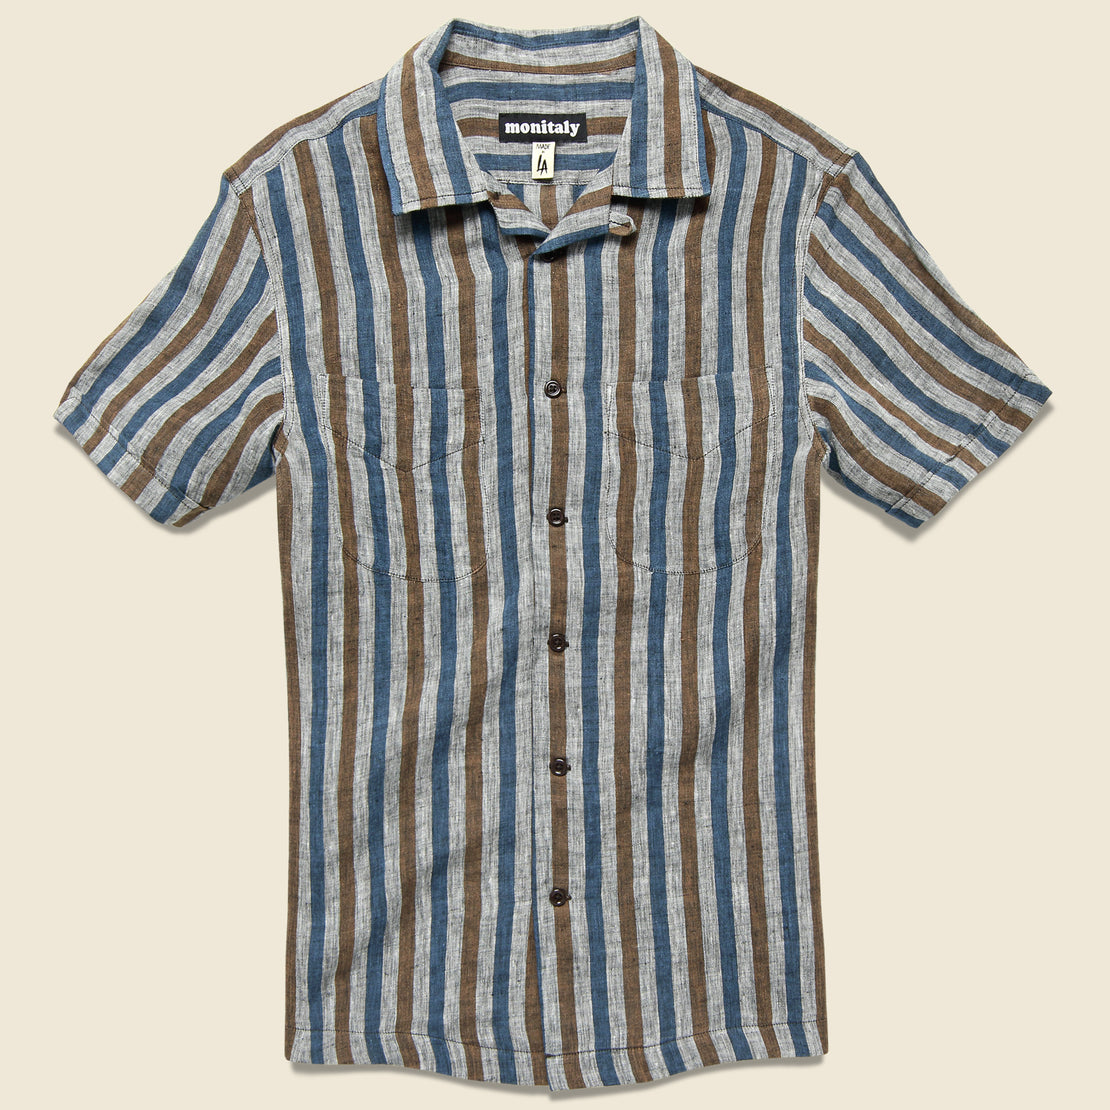 Monitaly Vacation Shirt - Navy/Tan Stripe